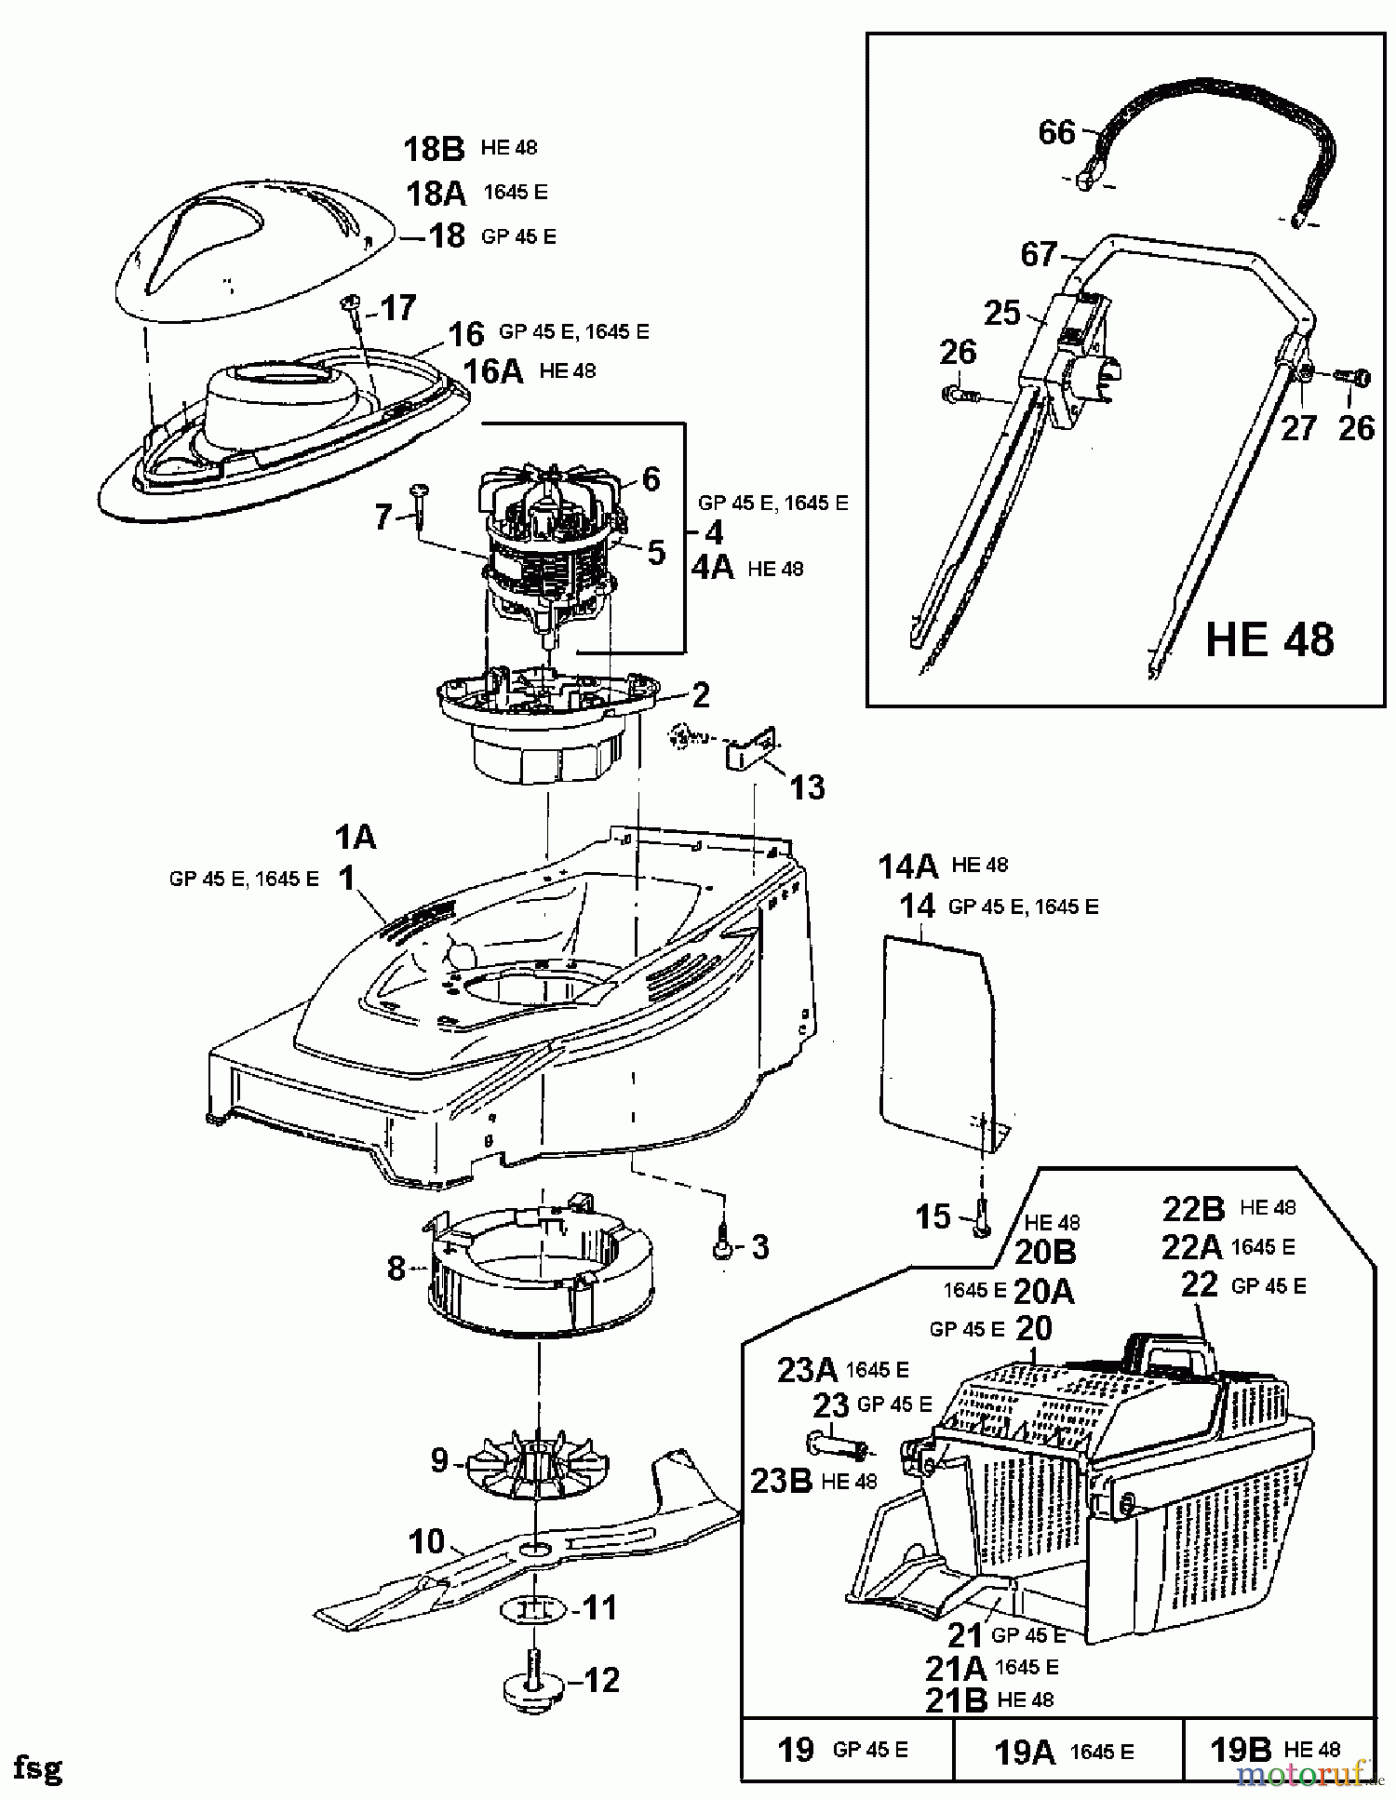  Gutbrod Elektromäher HE 48 18C-T2G-604  (2000) Grundgerät